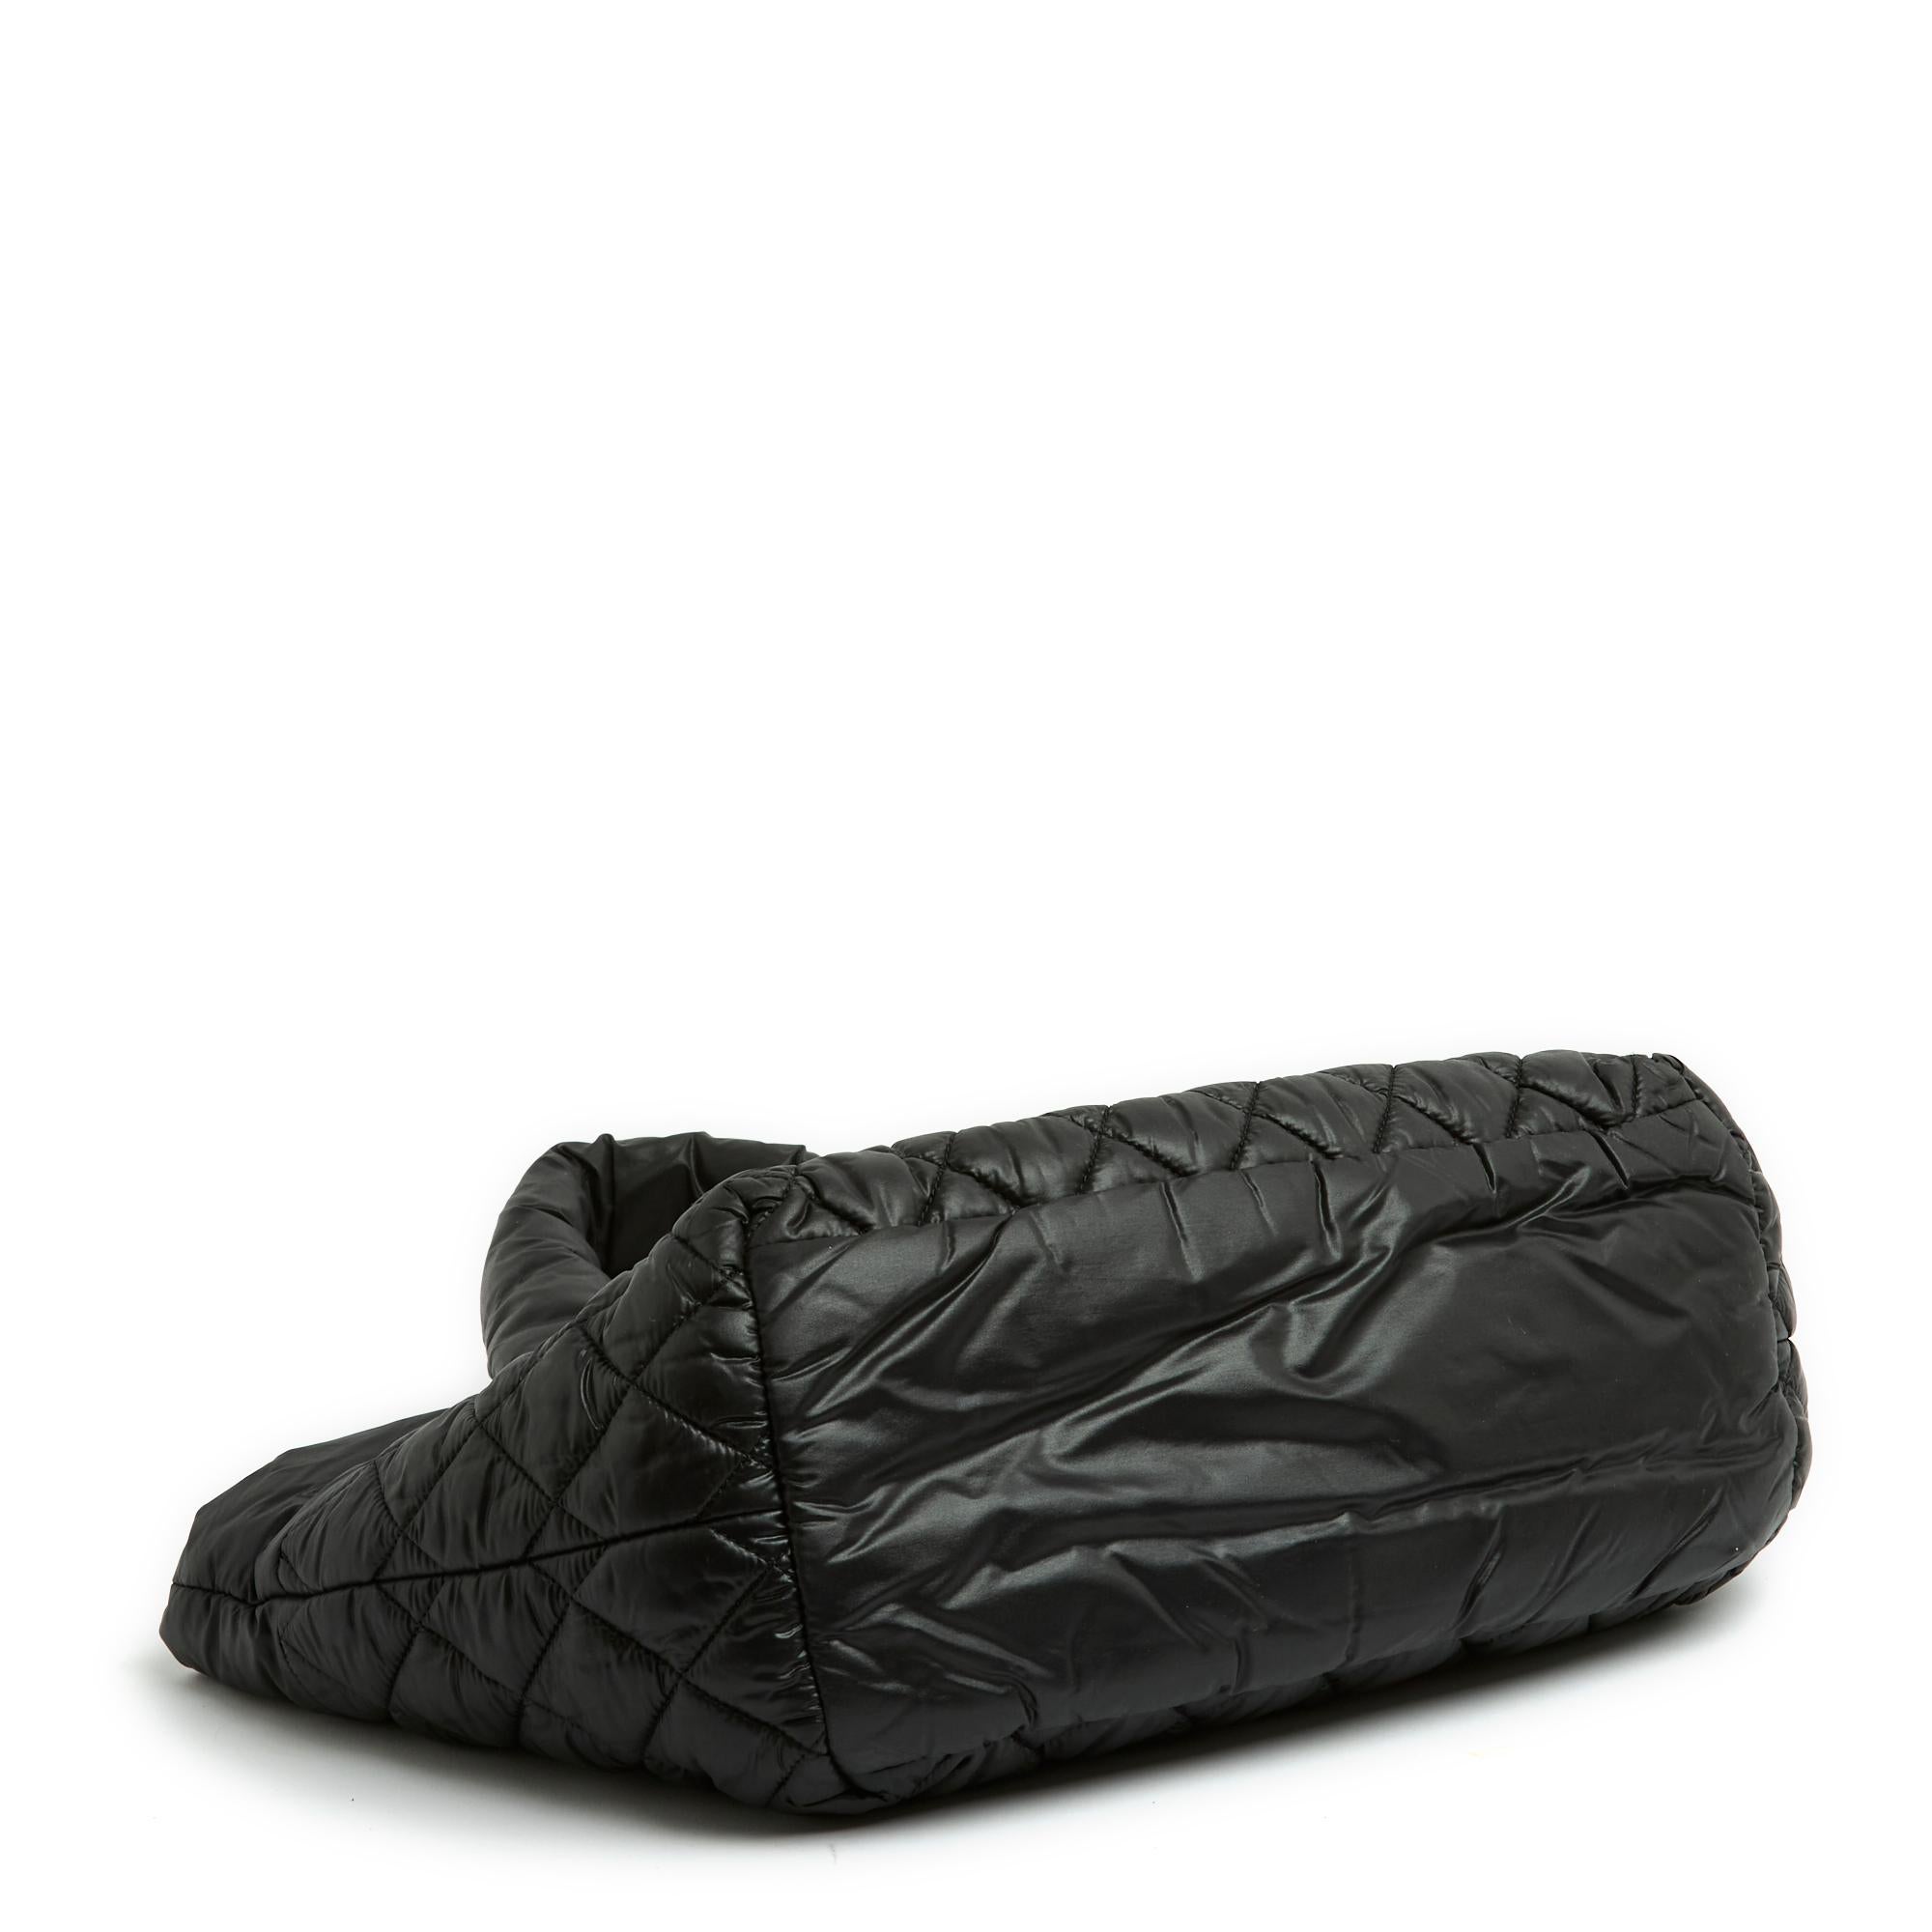 Chanel Sac Cocoon Nylon Black PM Bag For Sale 2